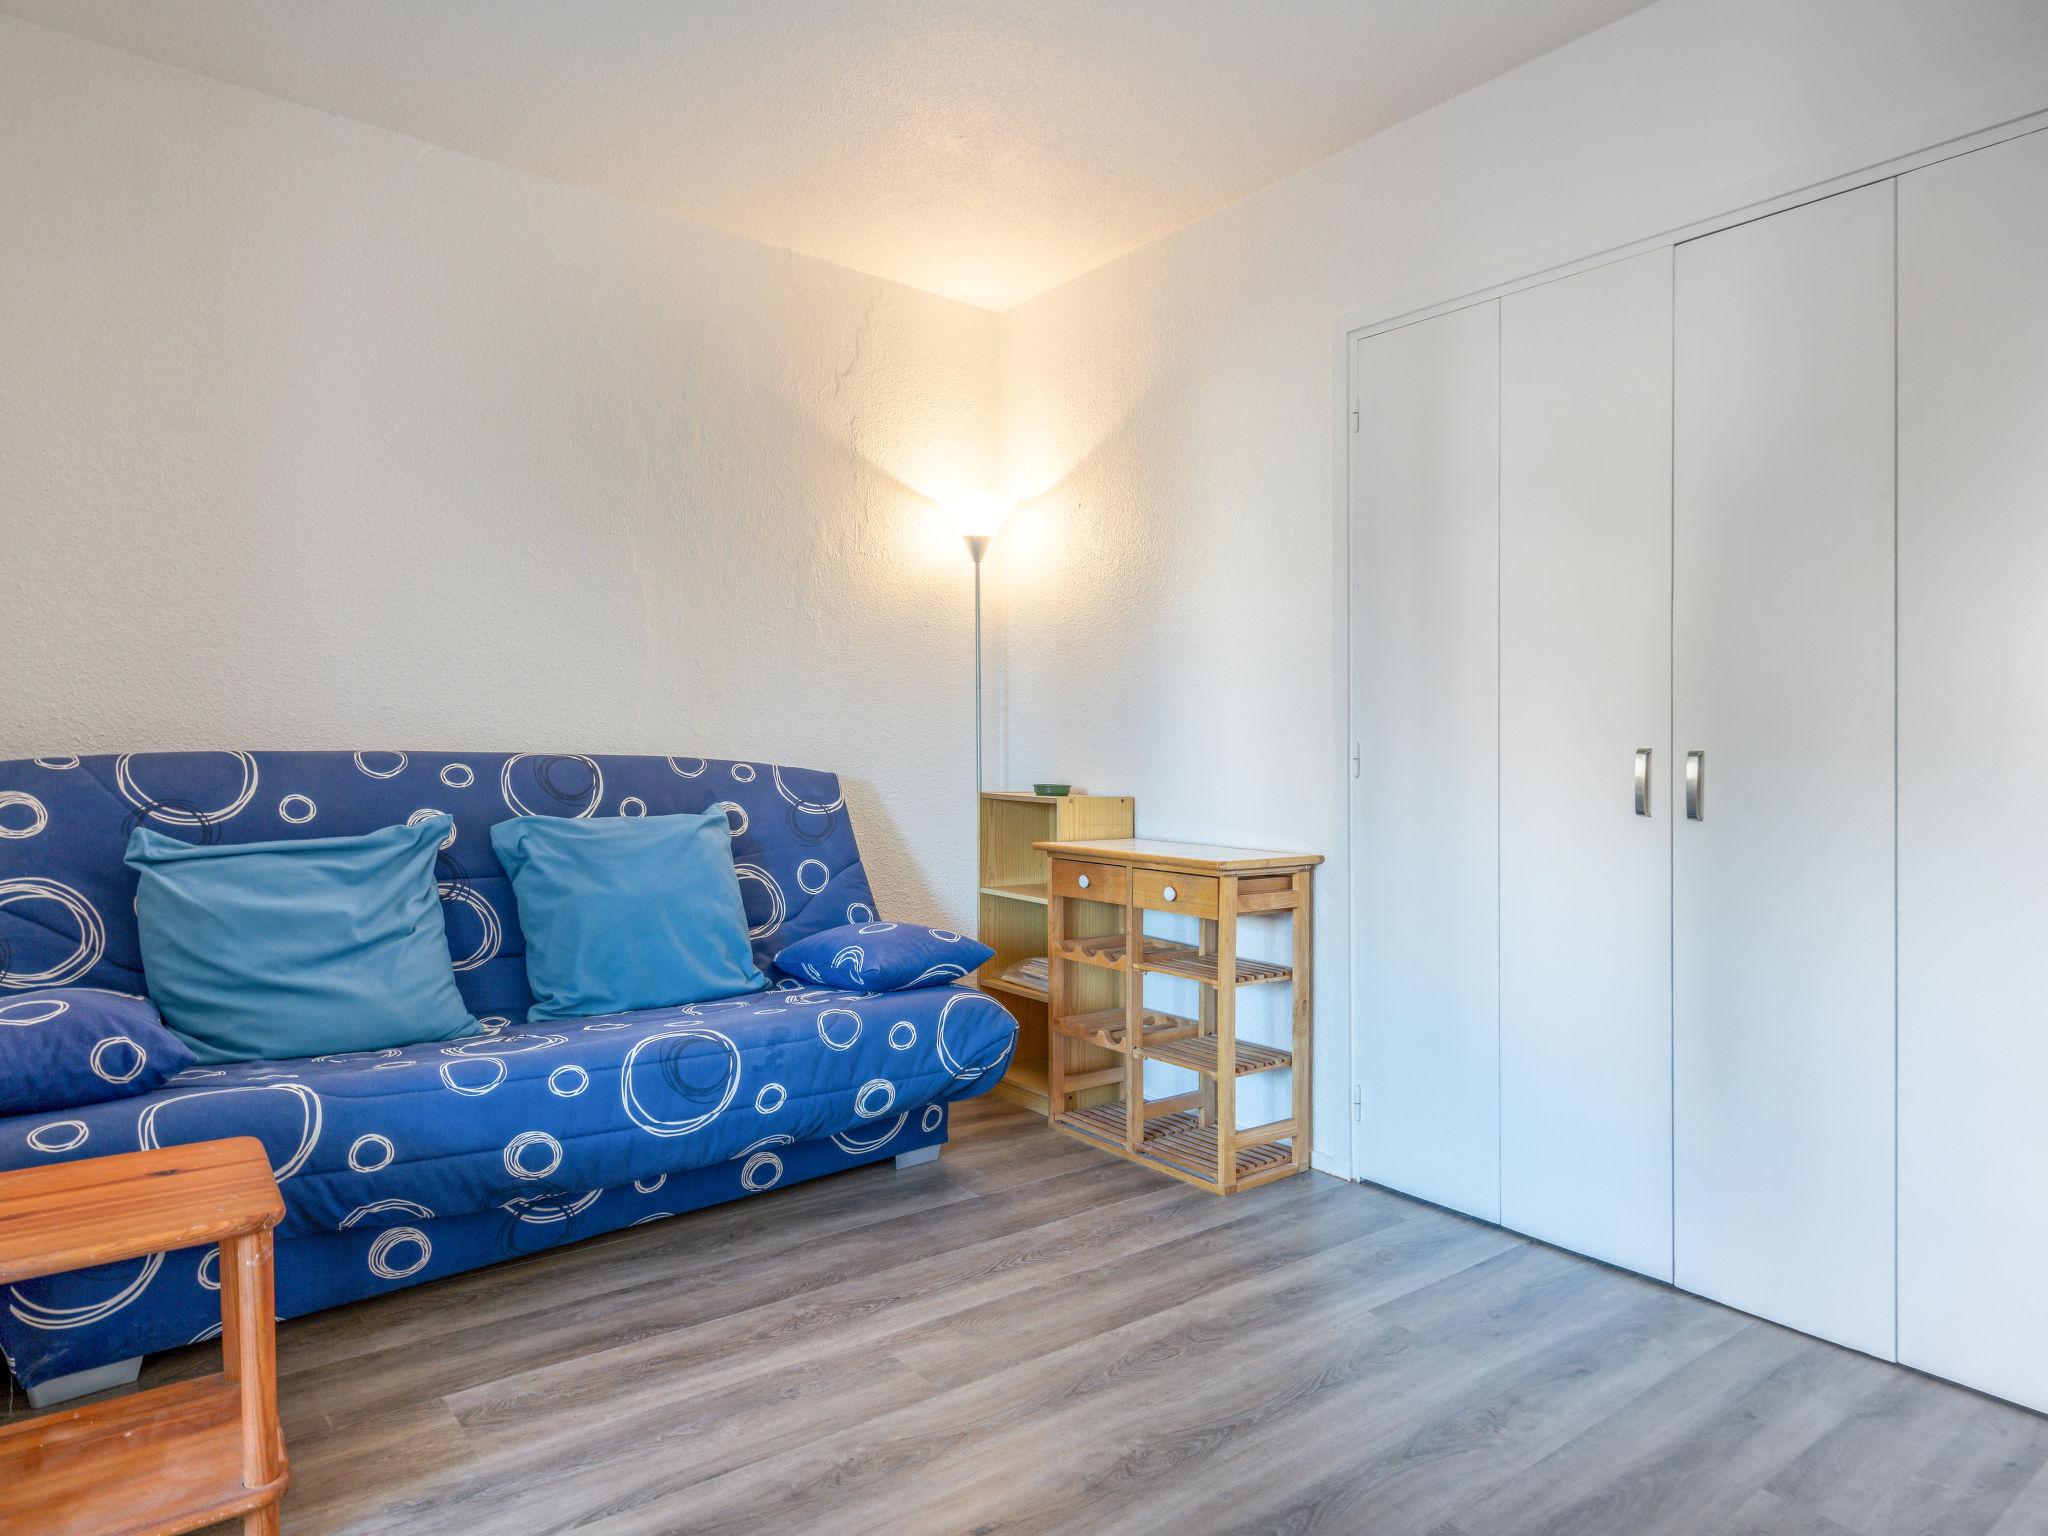 Foto 9 - Apartment in Agde mit blick aufs meer